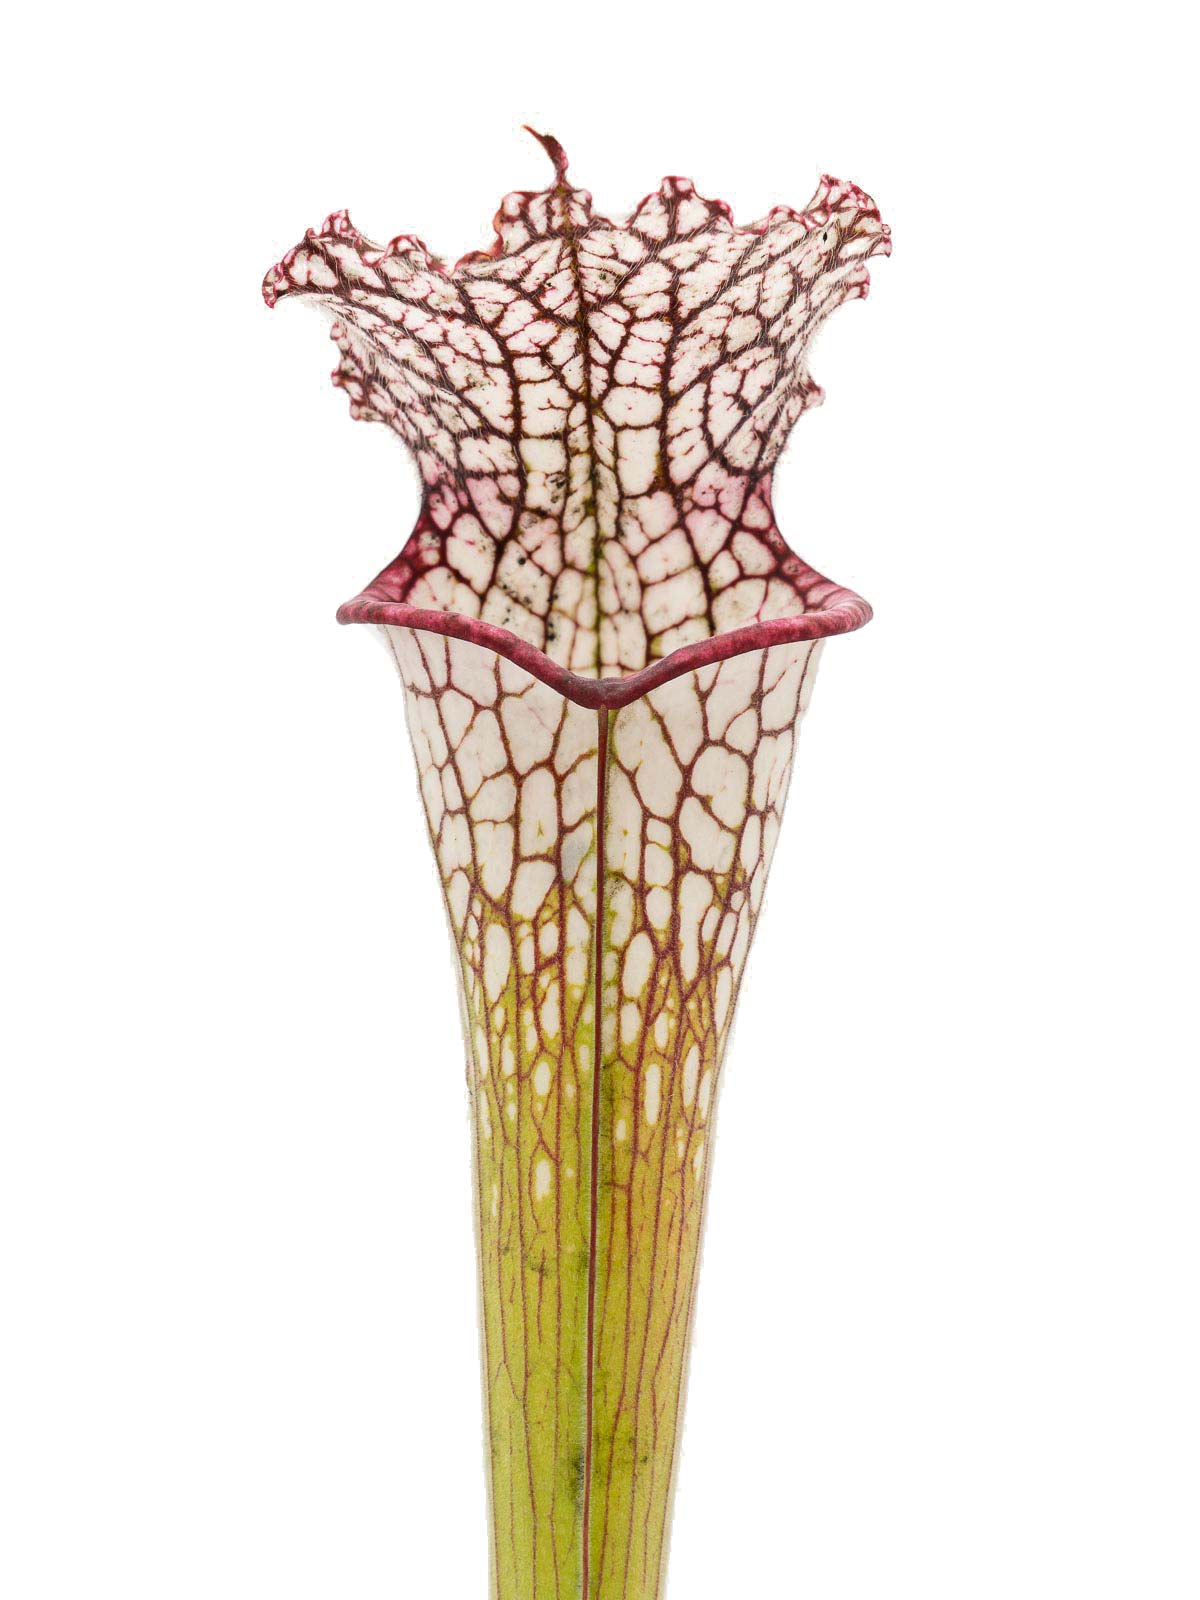 Sarracenia leucophylla - `Holo Type´, pubescent form, BG New York